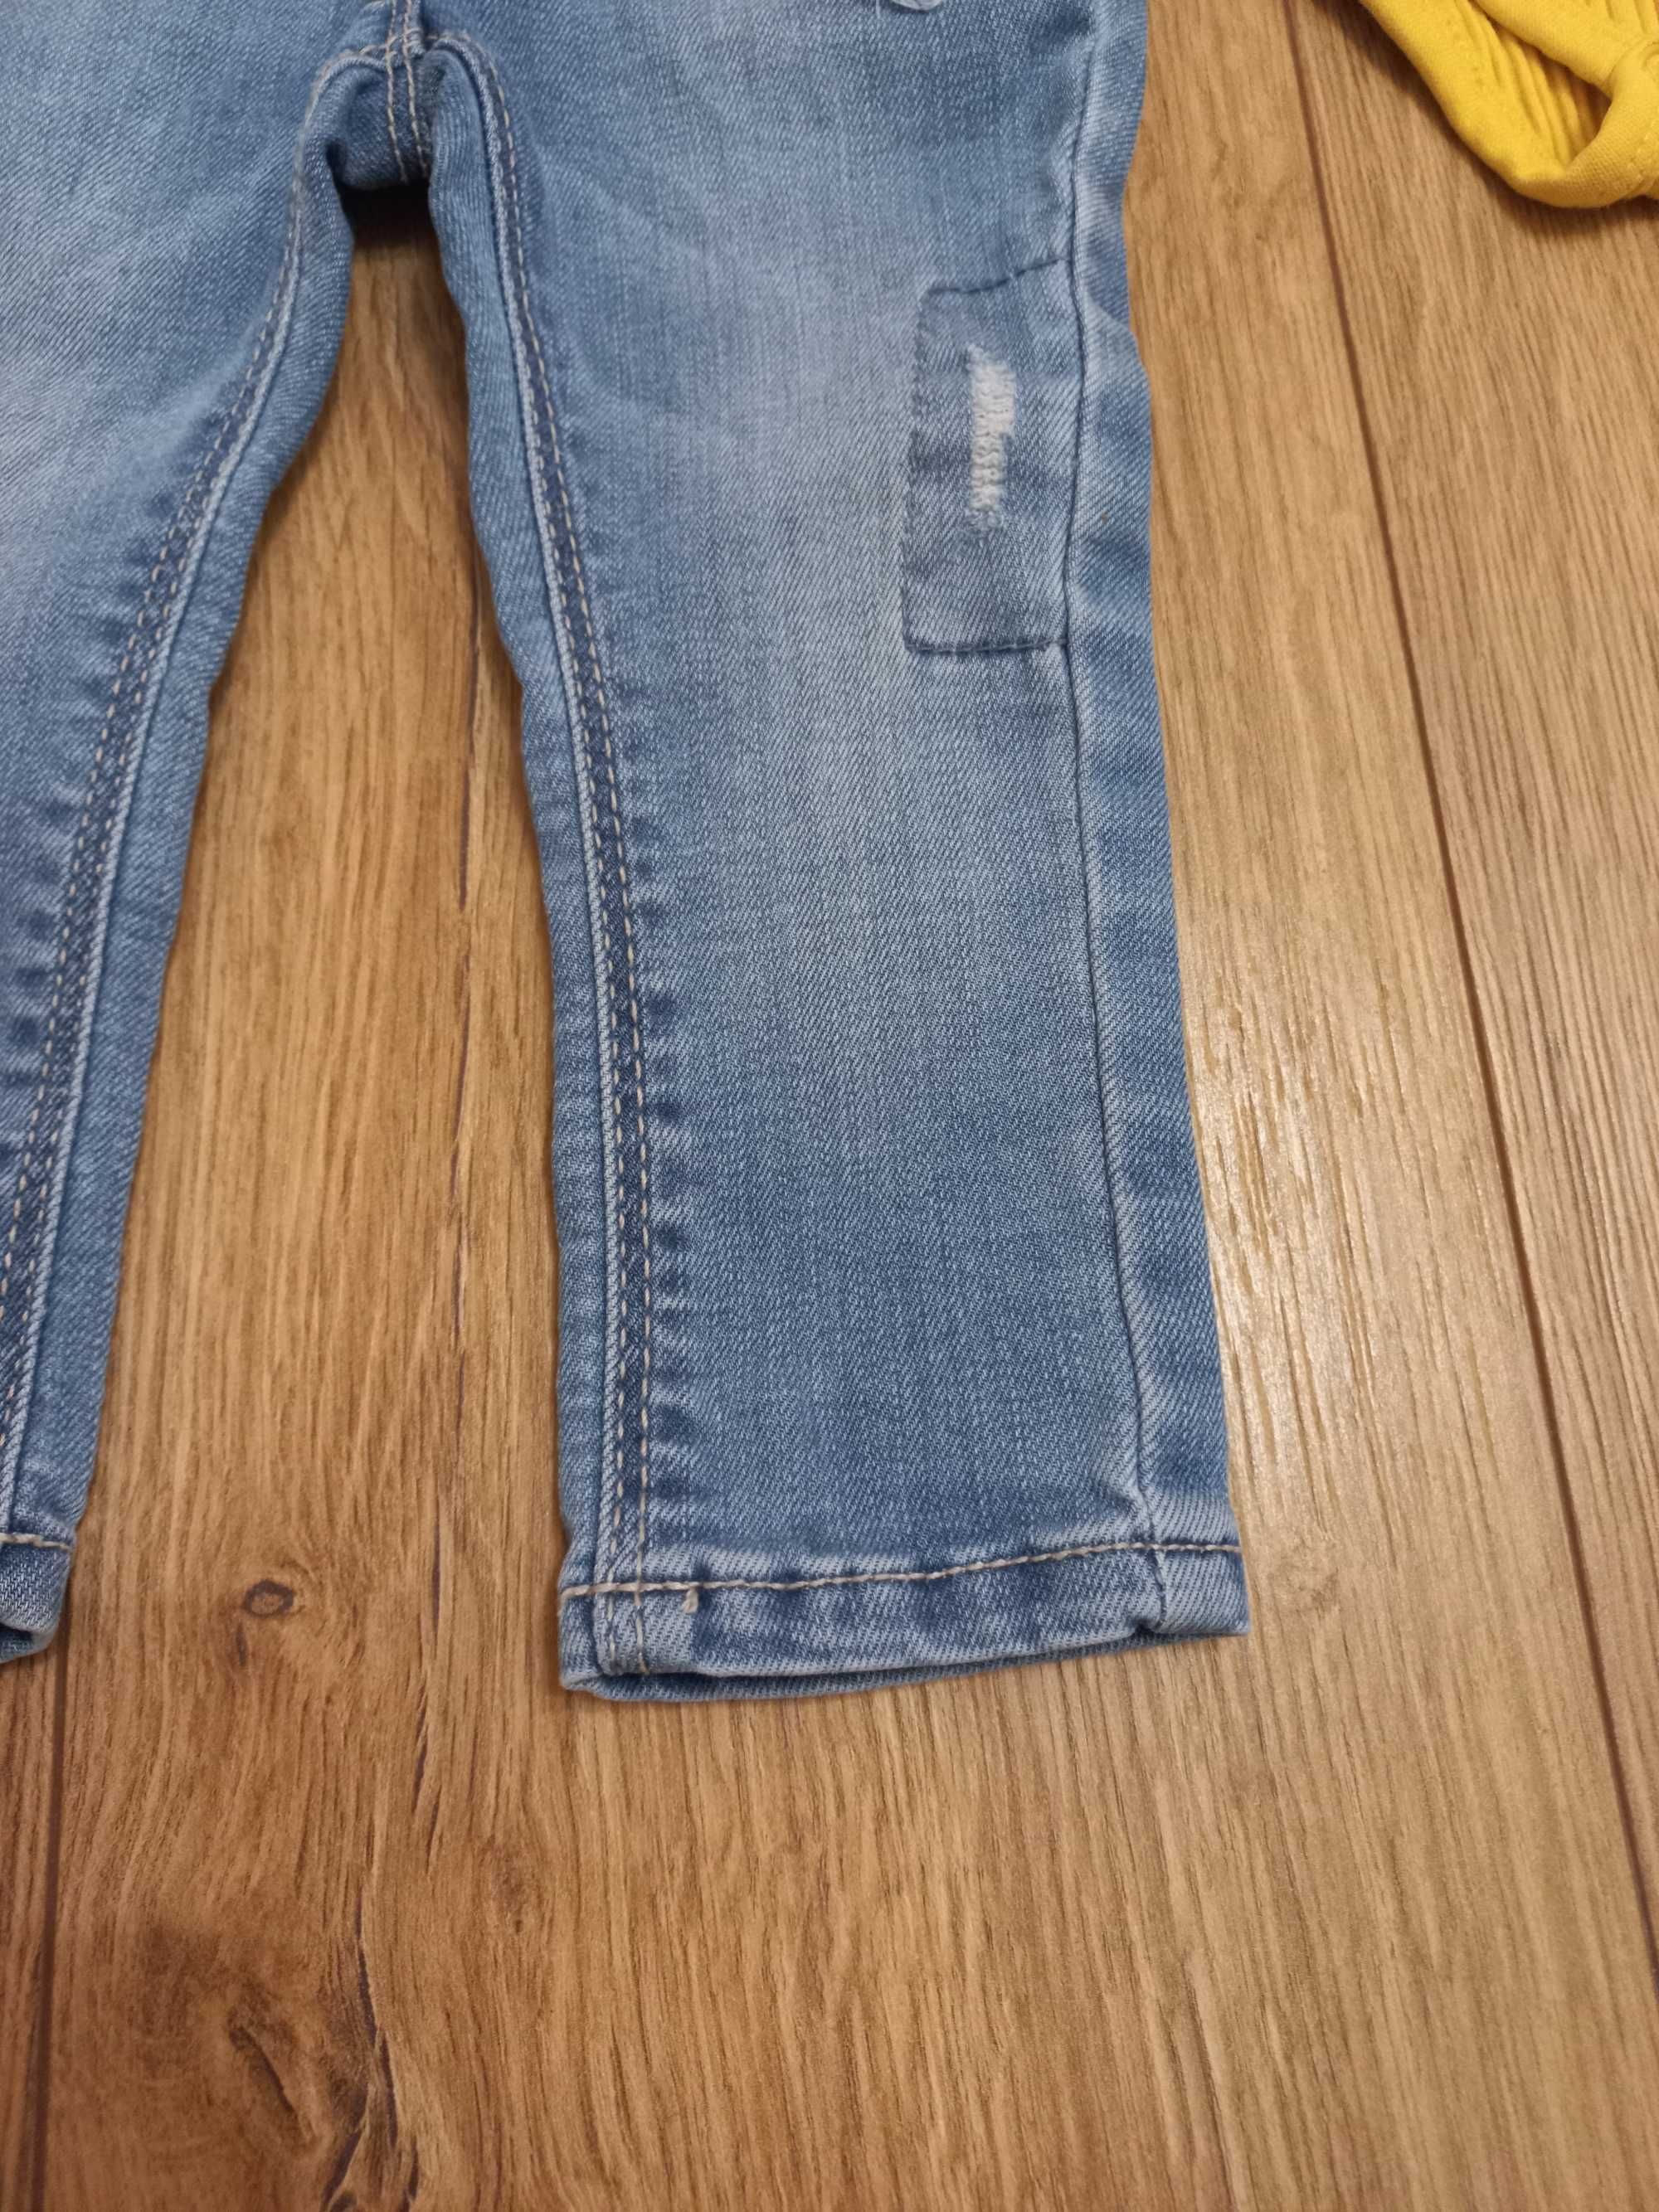 Komplet r.74 jeansy Tape a'loeil, body, legginsy